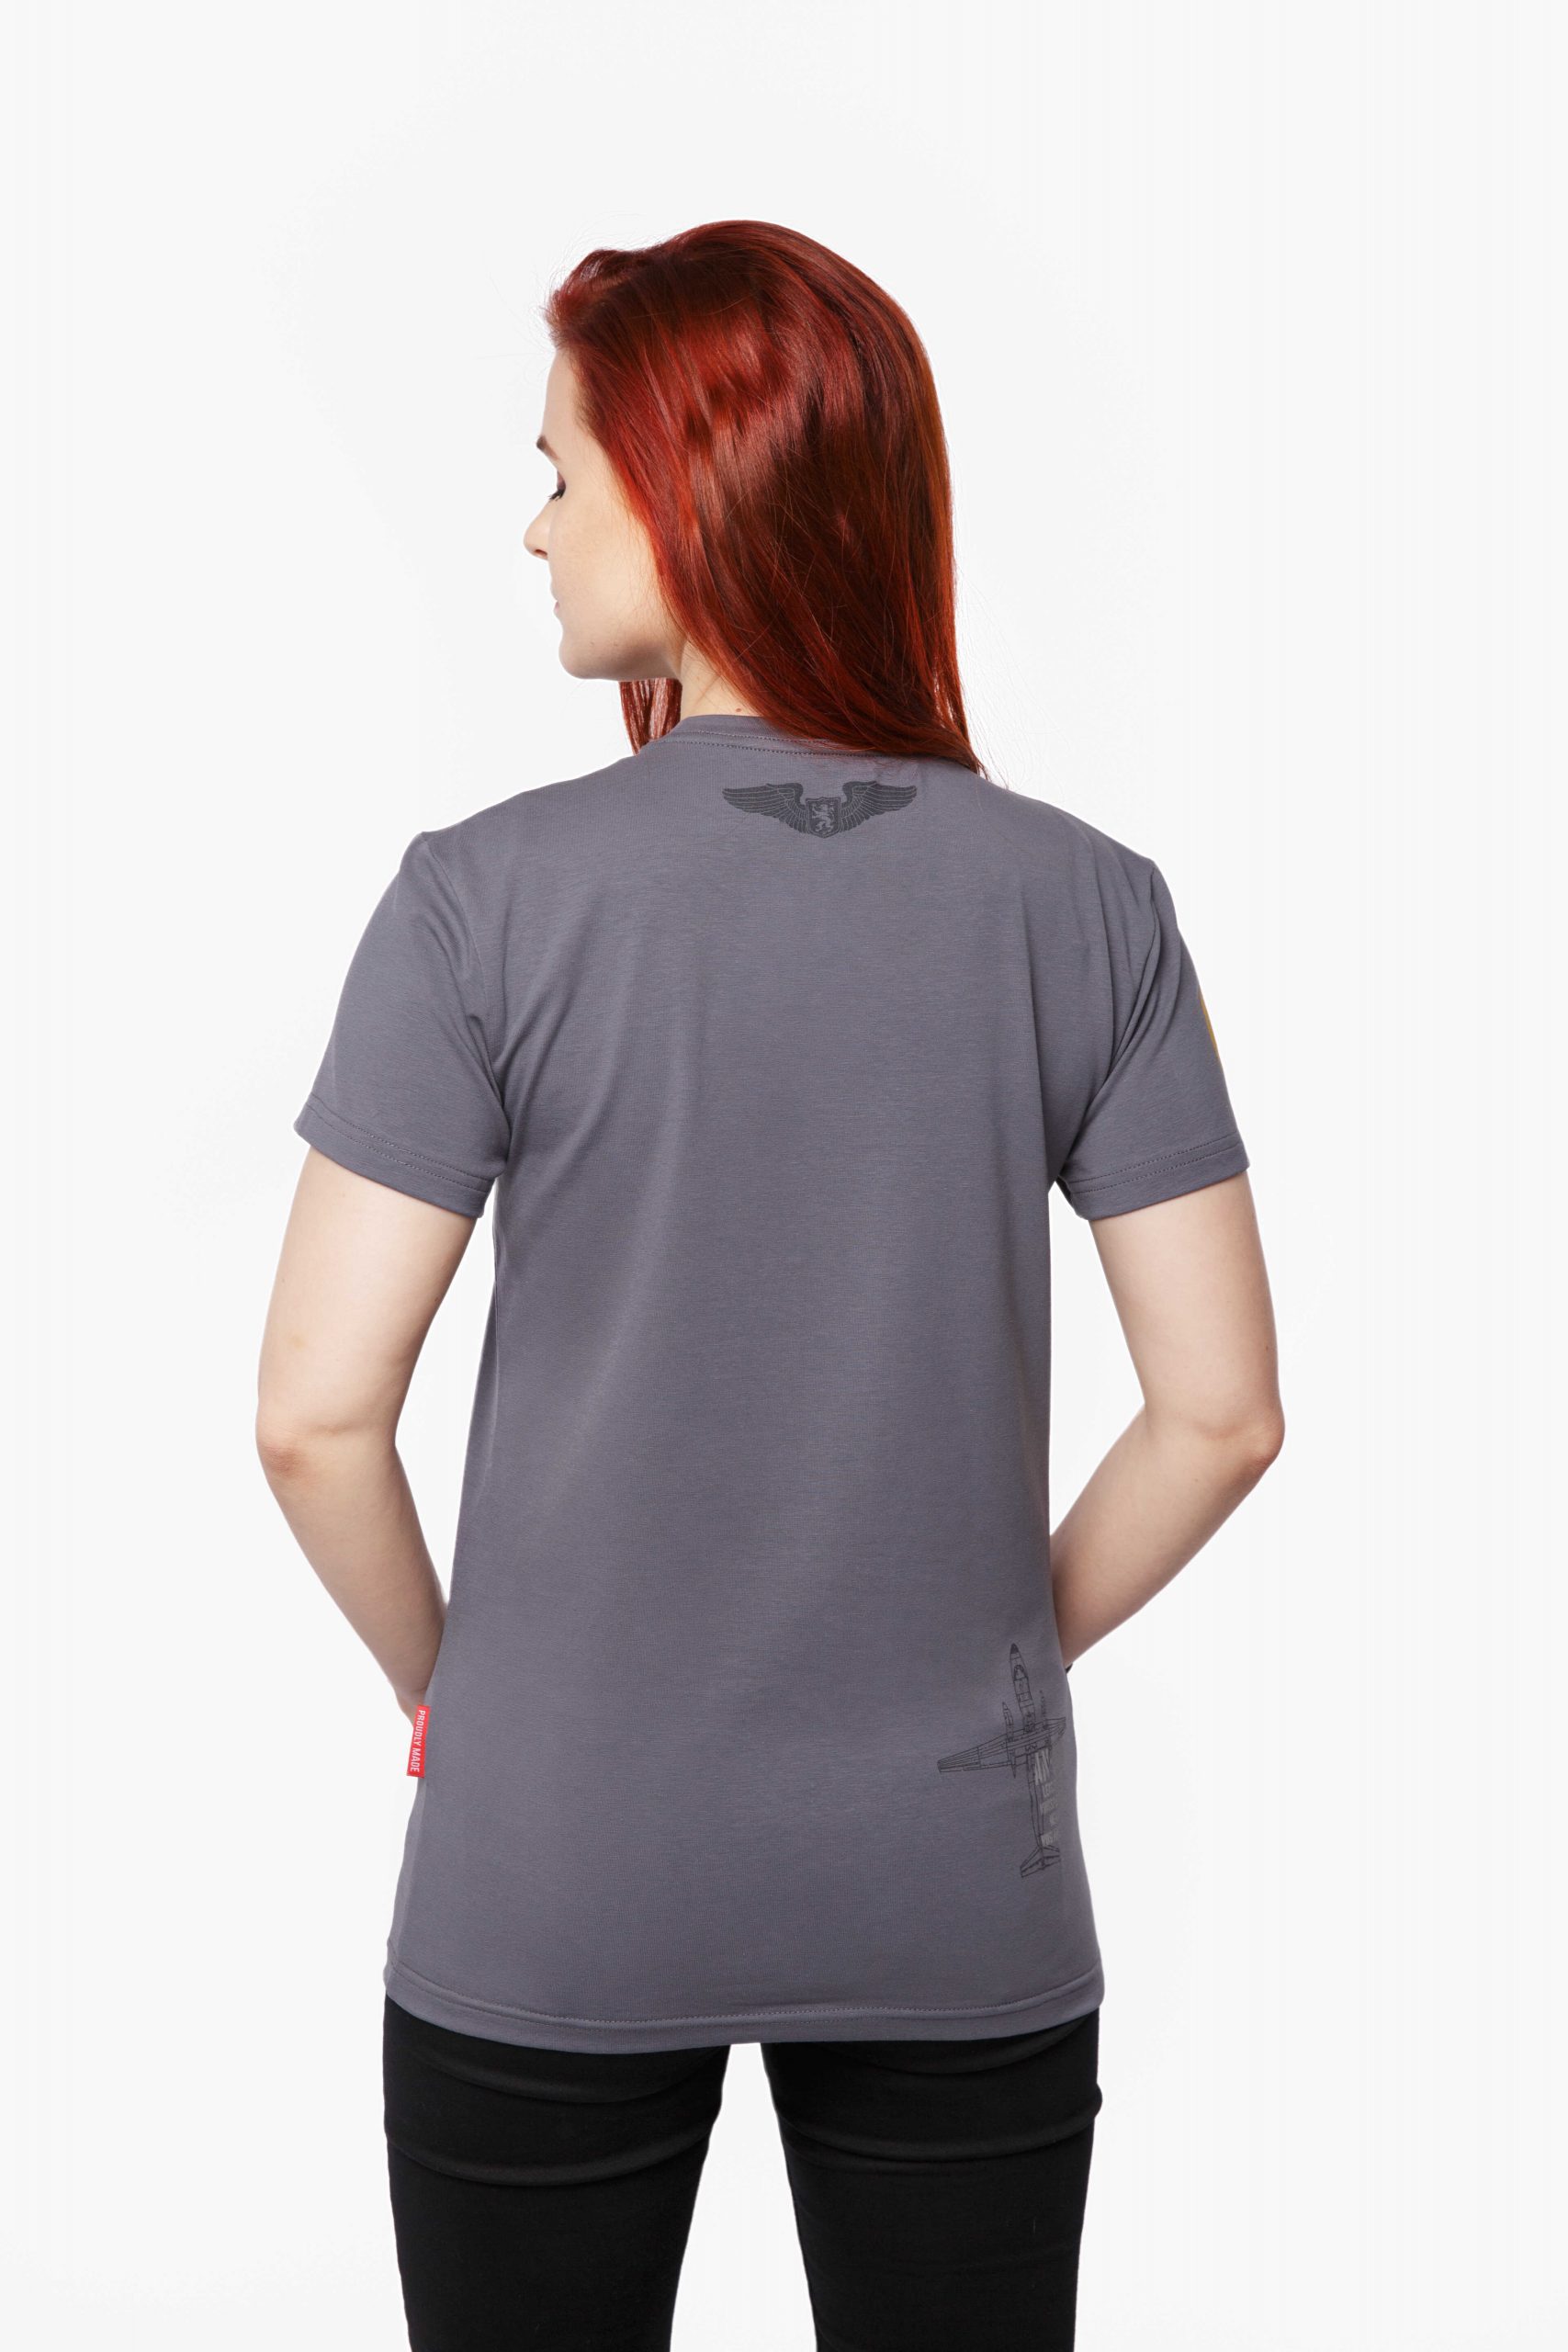 Women's T-Shirt 15 Brigade. Color gray. 1.